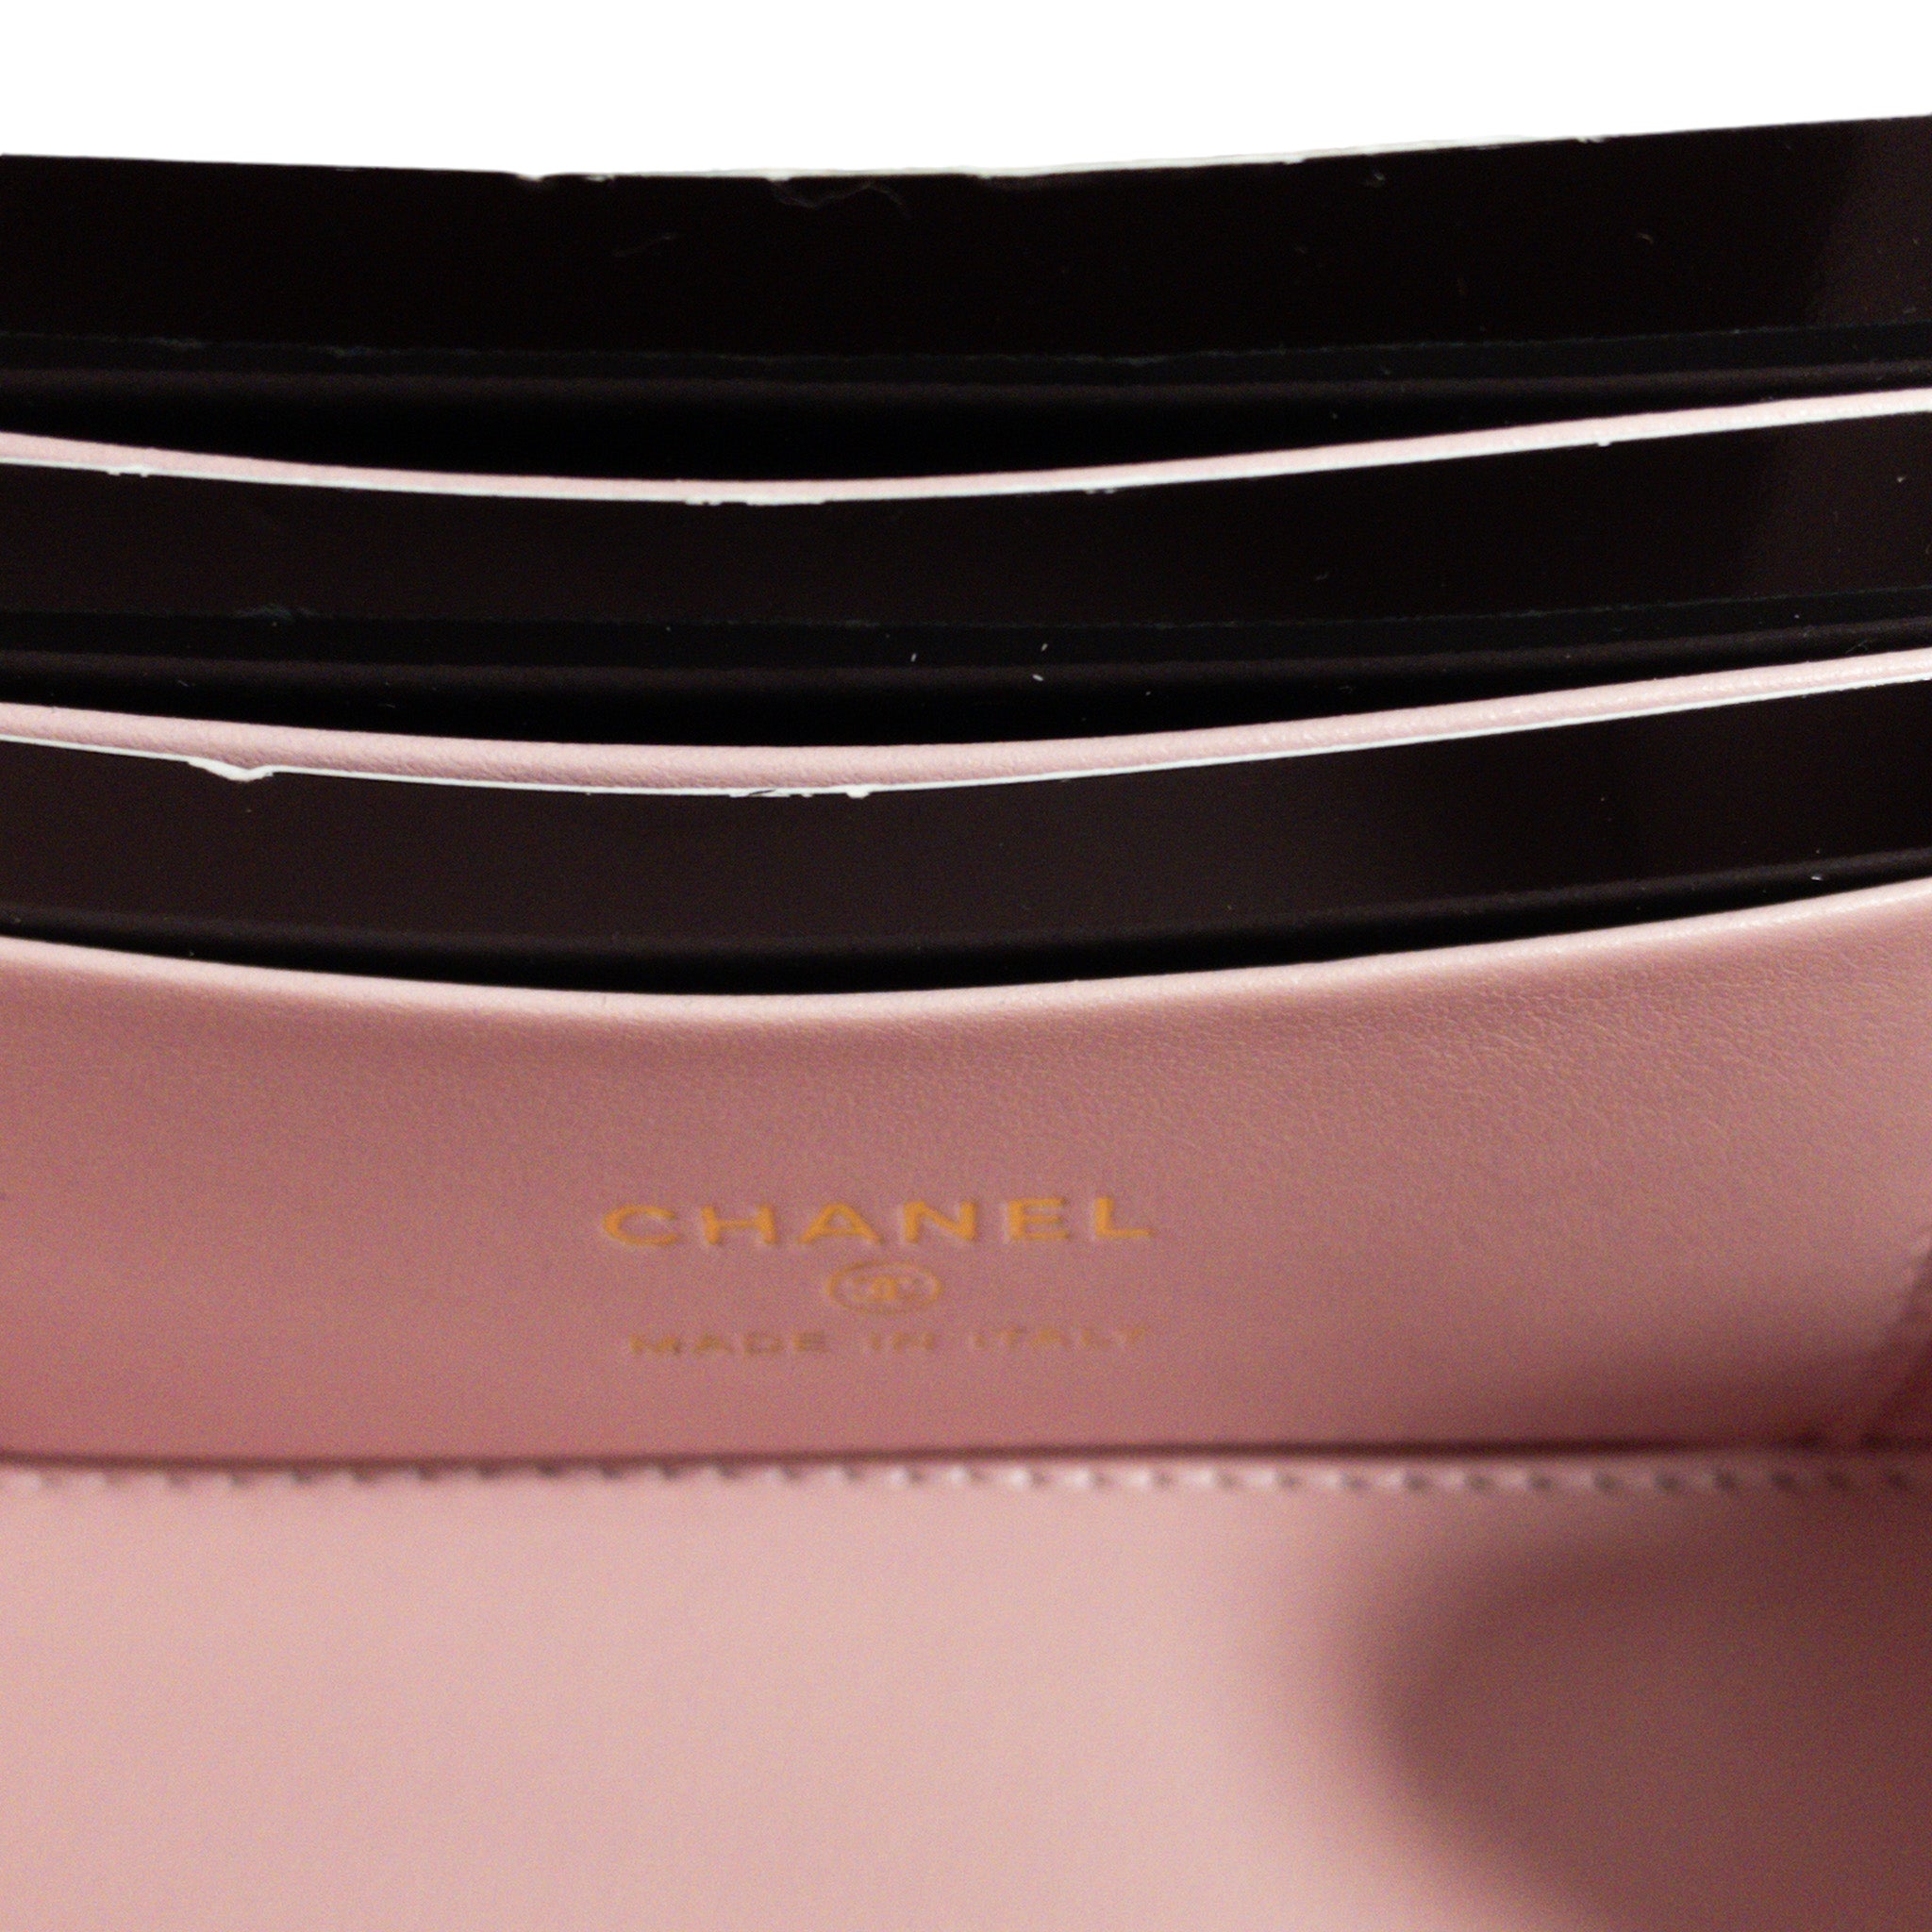 Chanel Pink Lambskin Vanity Case w/ Jeweled Chain